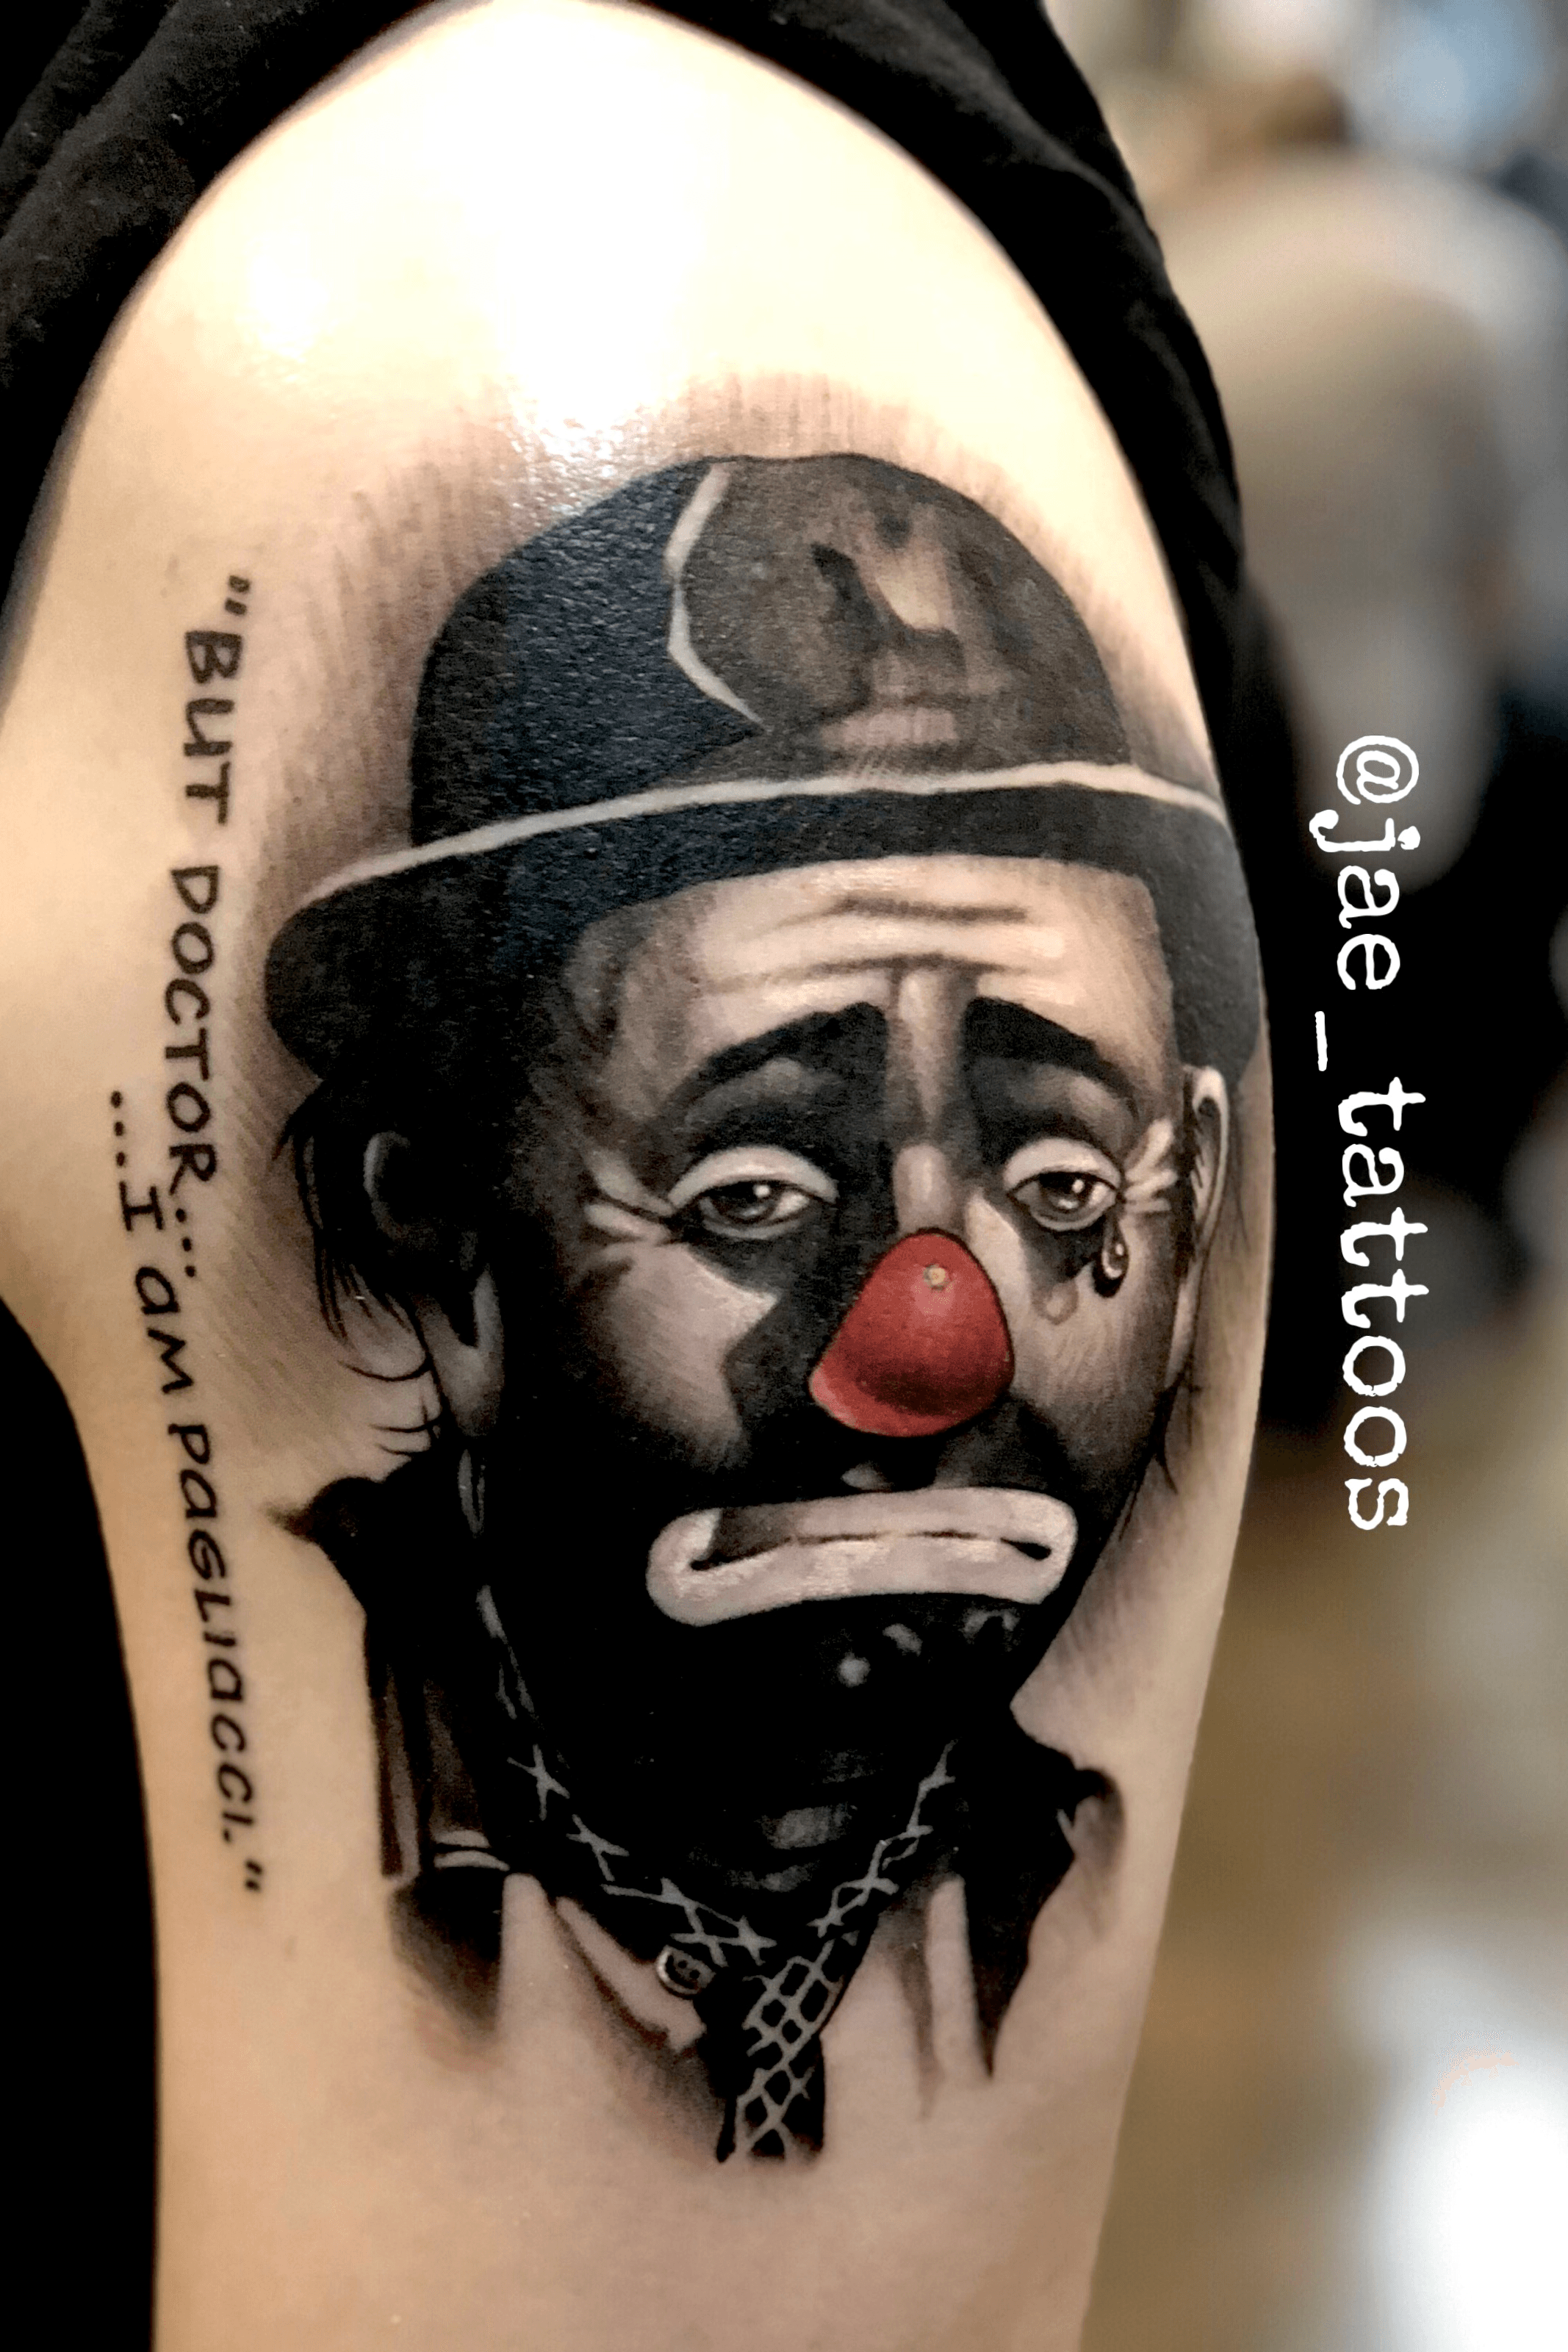 Sad clown face can be interesting tattoo